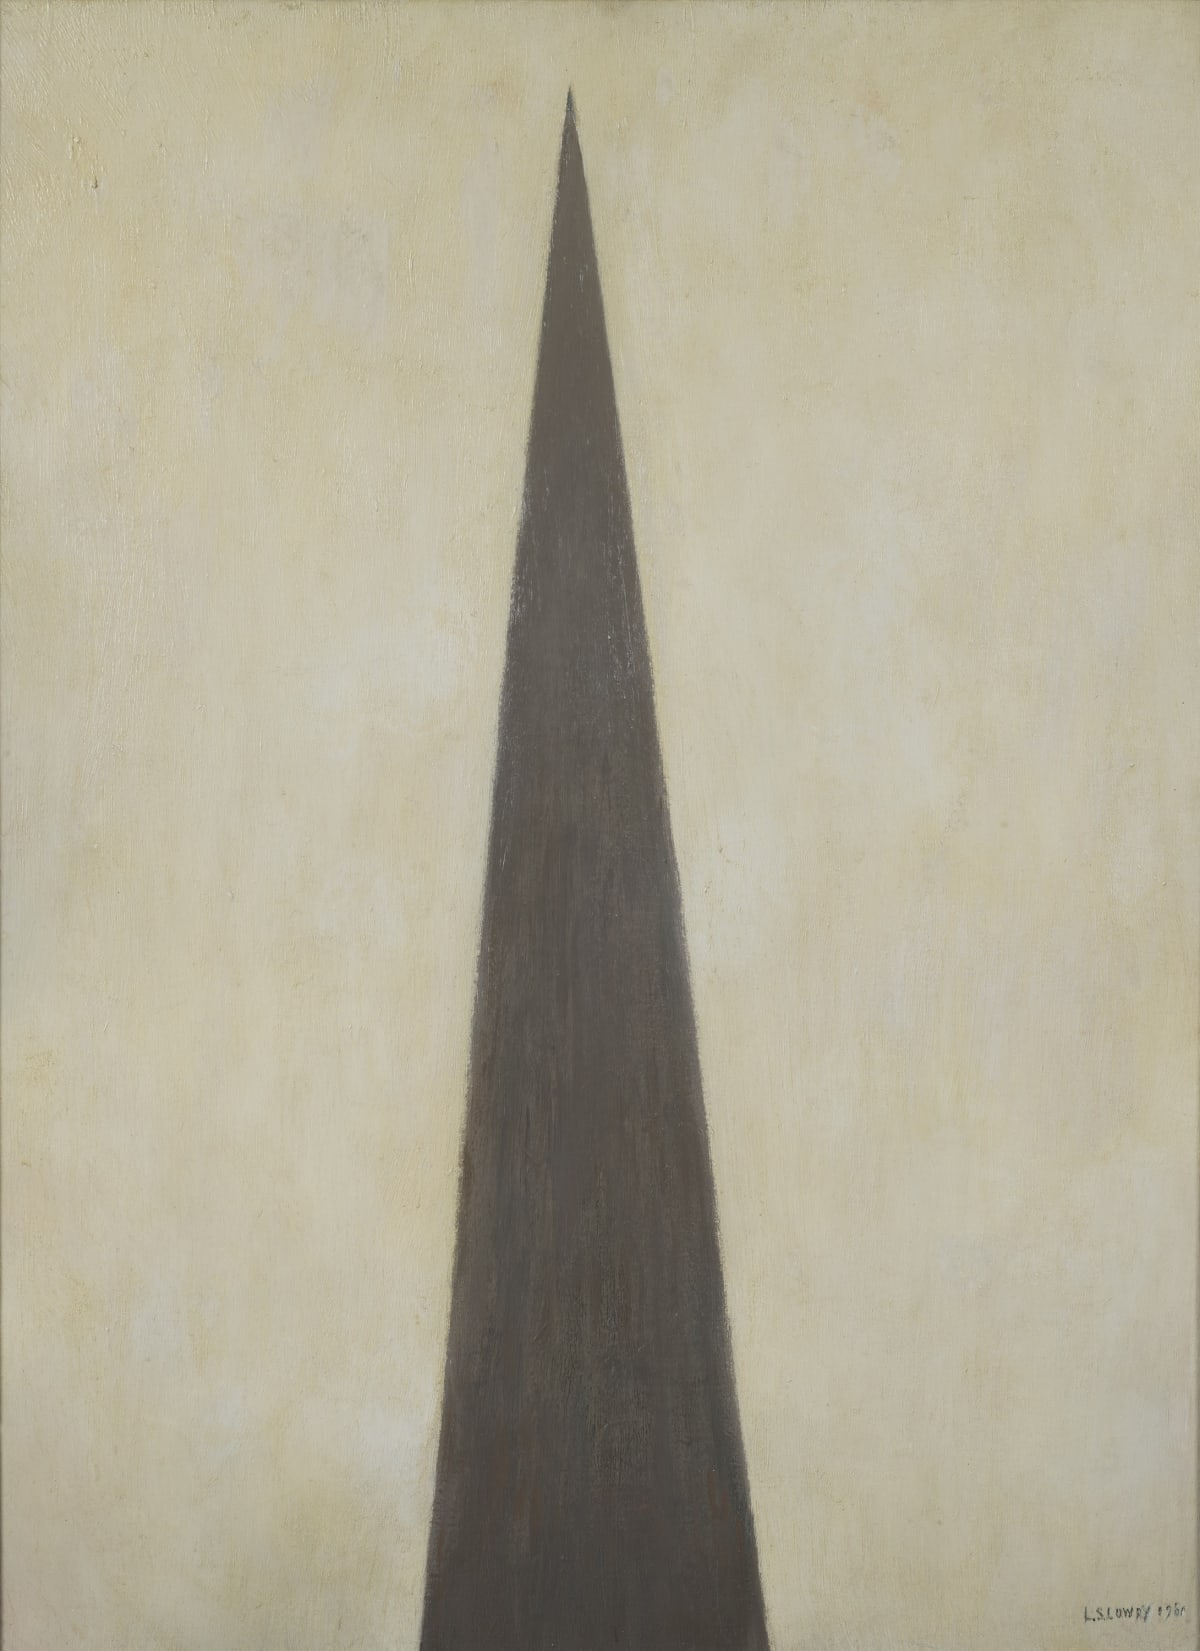 L.S. LOWRY RA (1887–1976) at Crane Kalman Gallery